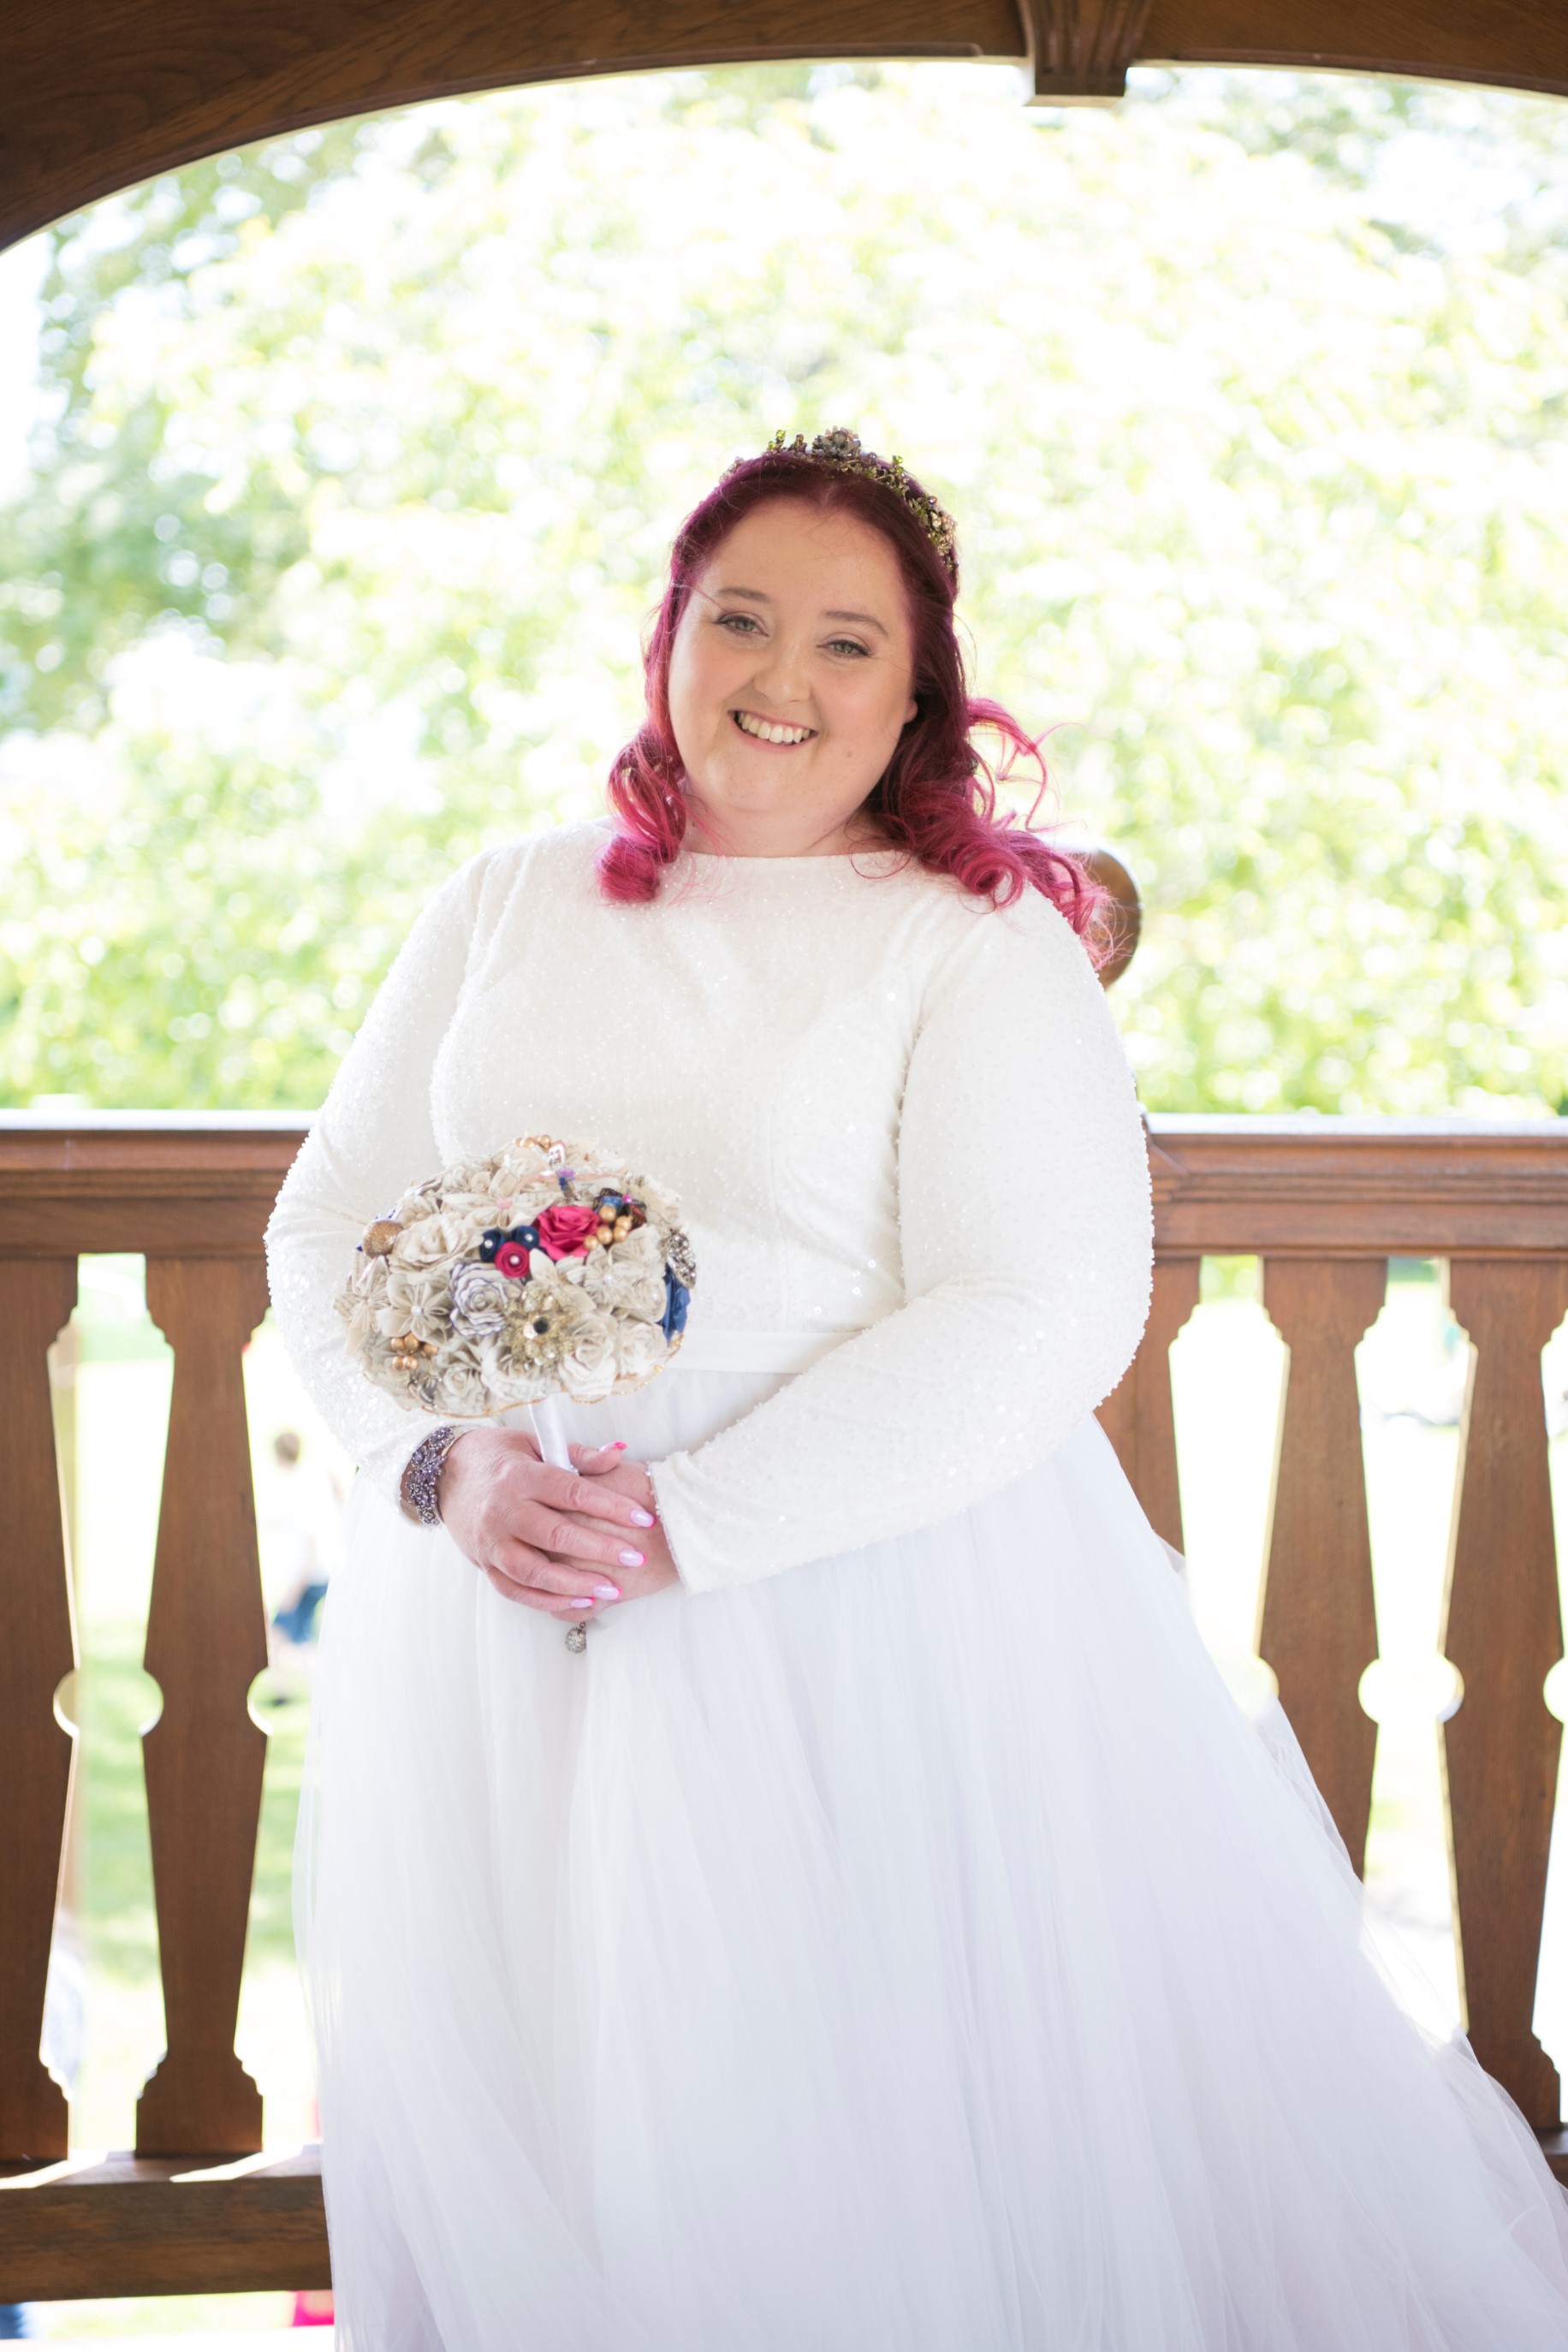 Zoo Wedding- Emma May Photography- Unconventional Wedding- Unique Wedding Inspiration- Pink Haired Bride- Alternative Wedding Bouquet